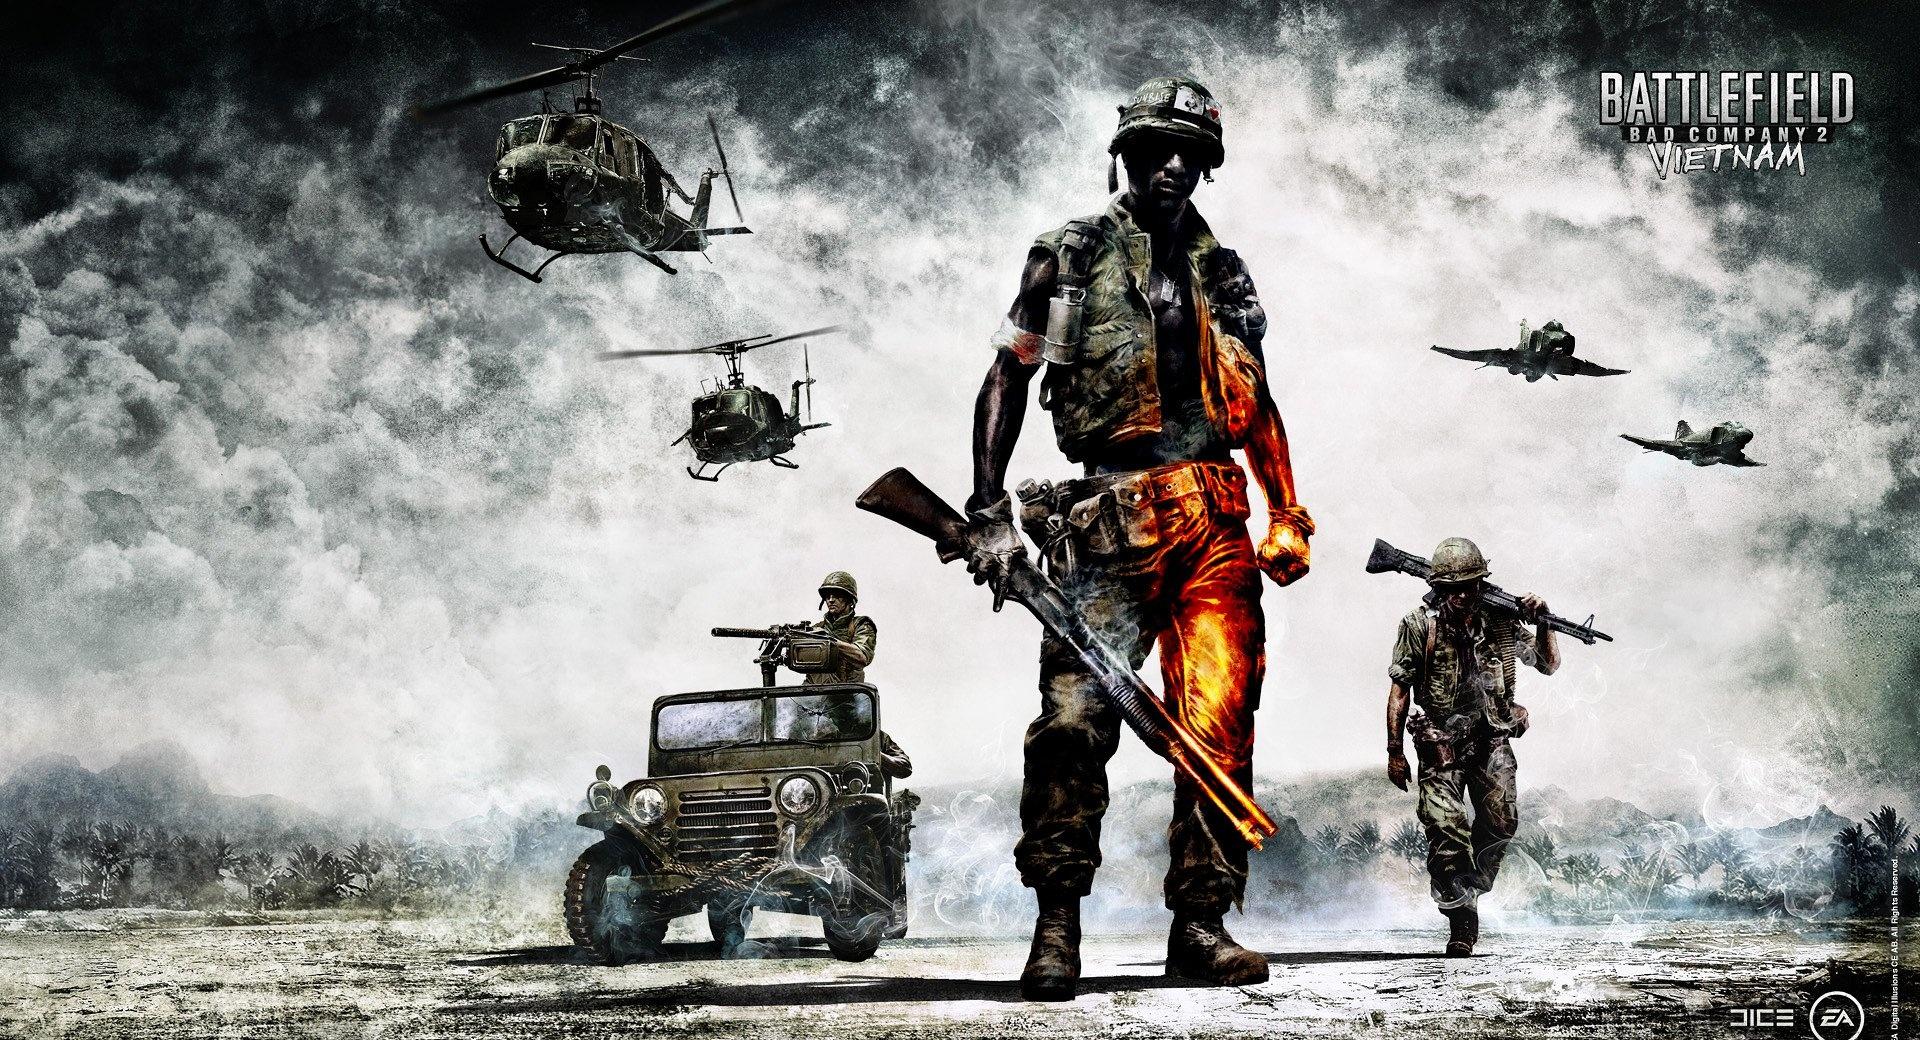 Battlefield Bad Company 2 Vietnam at 2048 x 2048 iPad size wallpapers HD quality